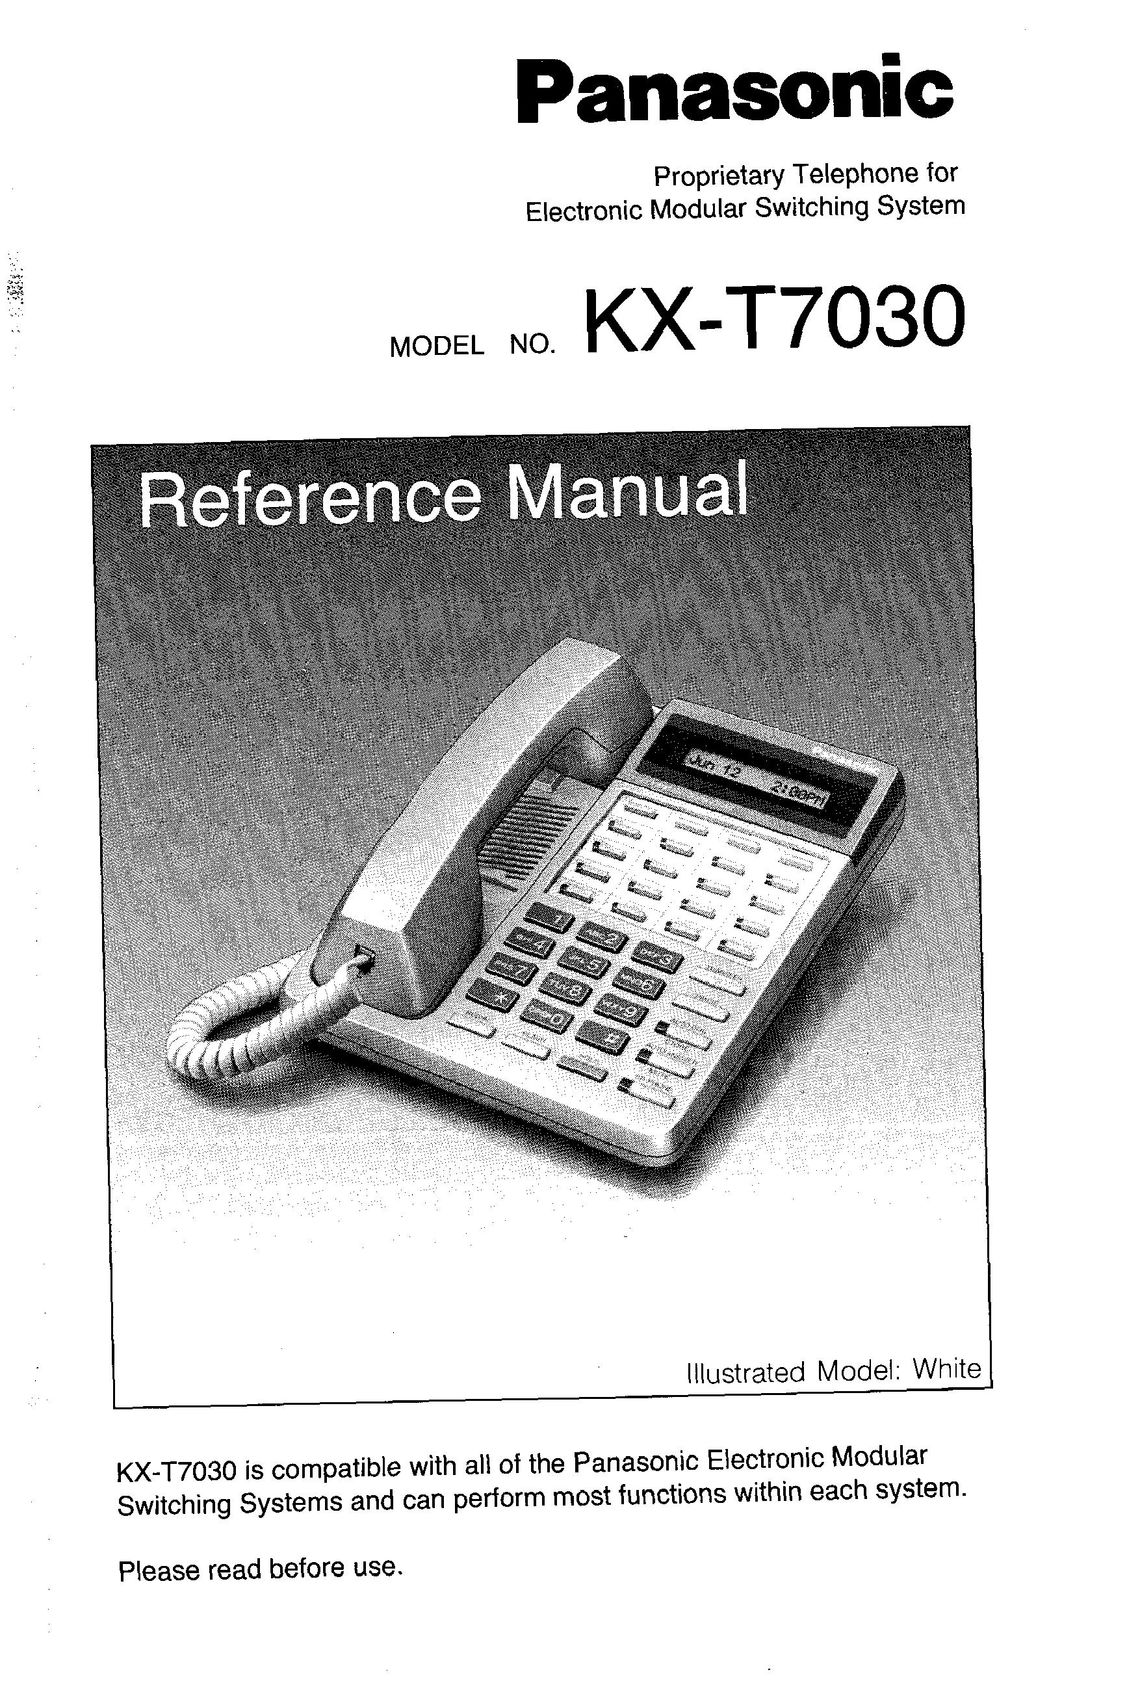 Panasonic electronic modular switching system Telephone User Manual